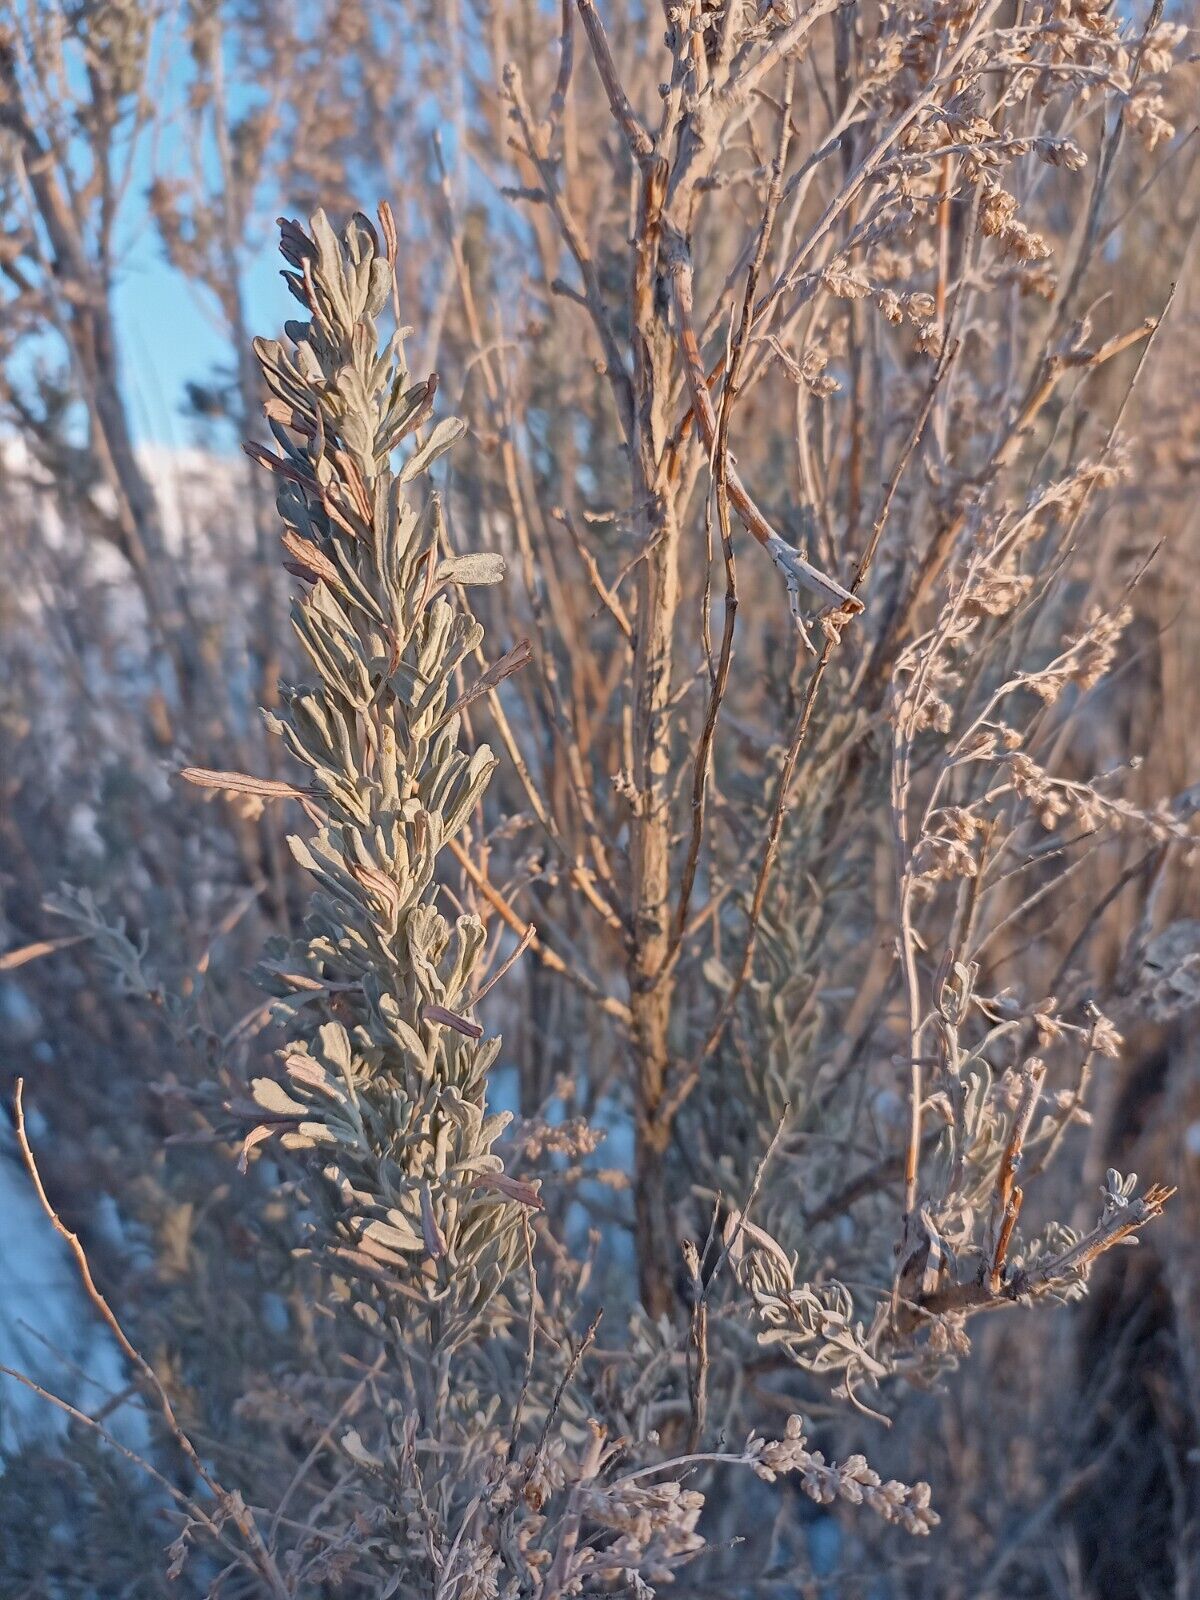 Basin Big Sagebrush, Artemisia tridentata var. tridentata 50-10,000 seeds